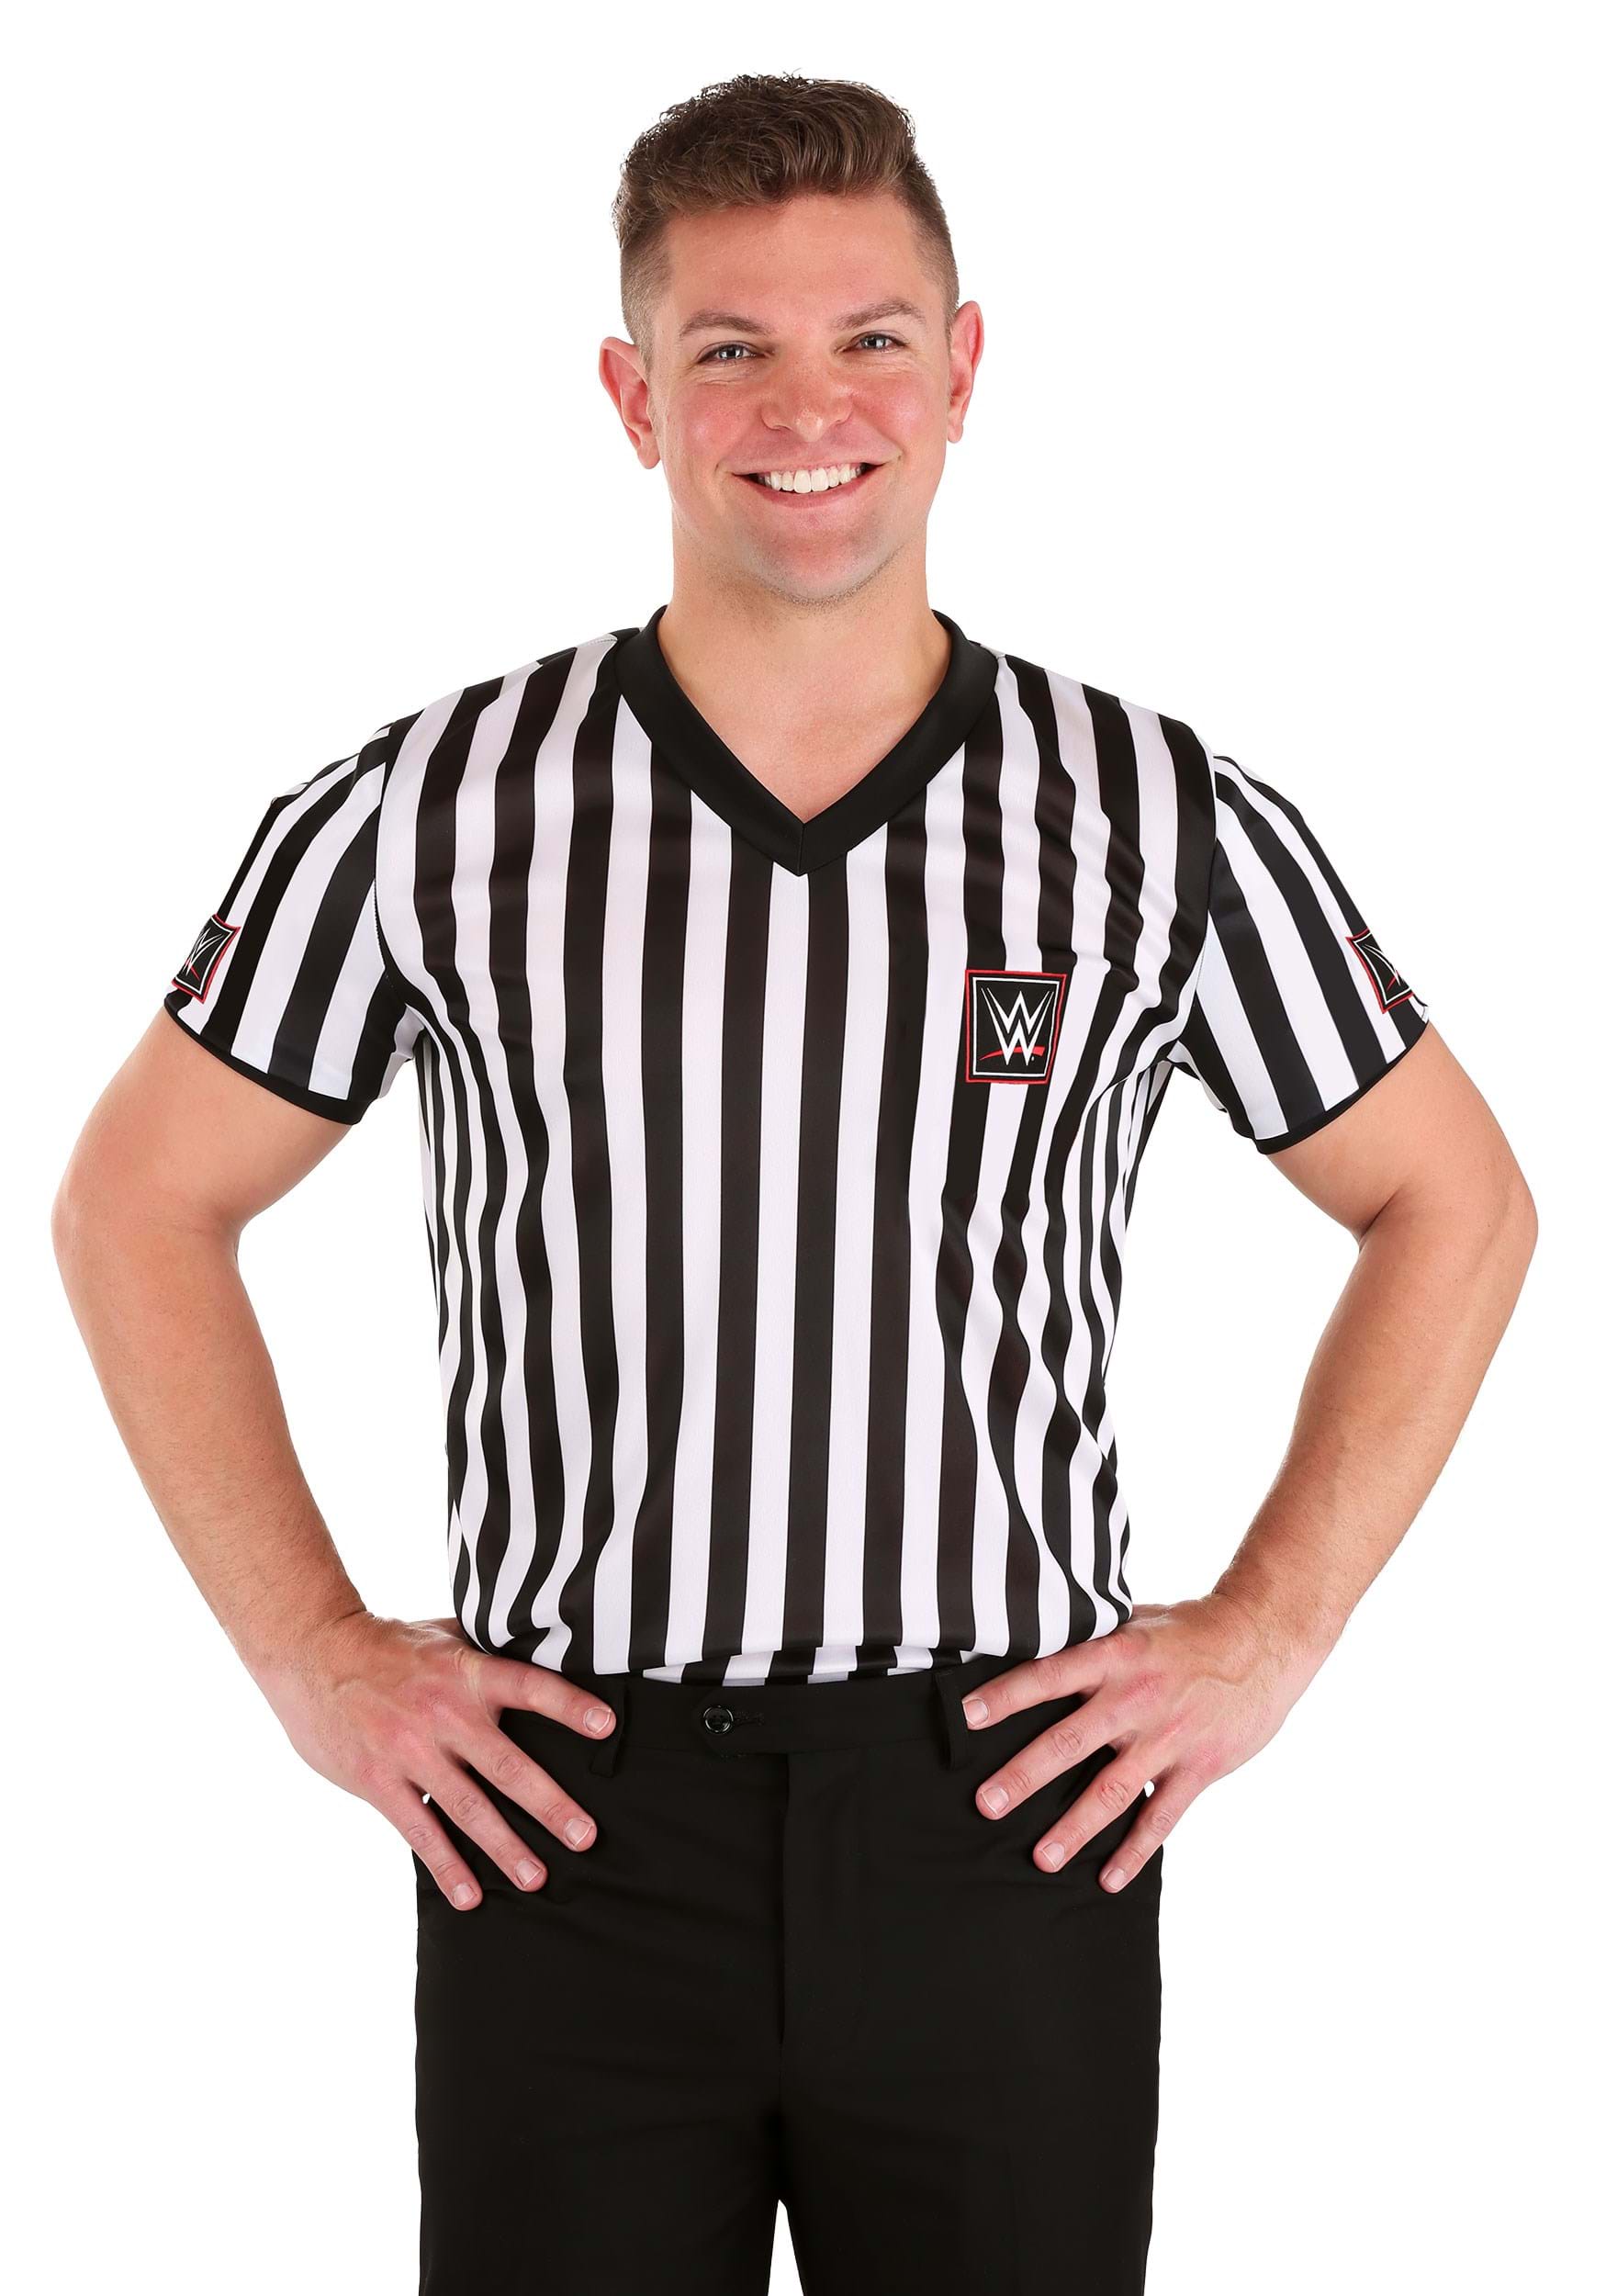 Photos - Fancy Dress WWE FUN Costumes Men's Referee Shirt Costume  Black/White FUN1493AD 